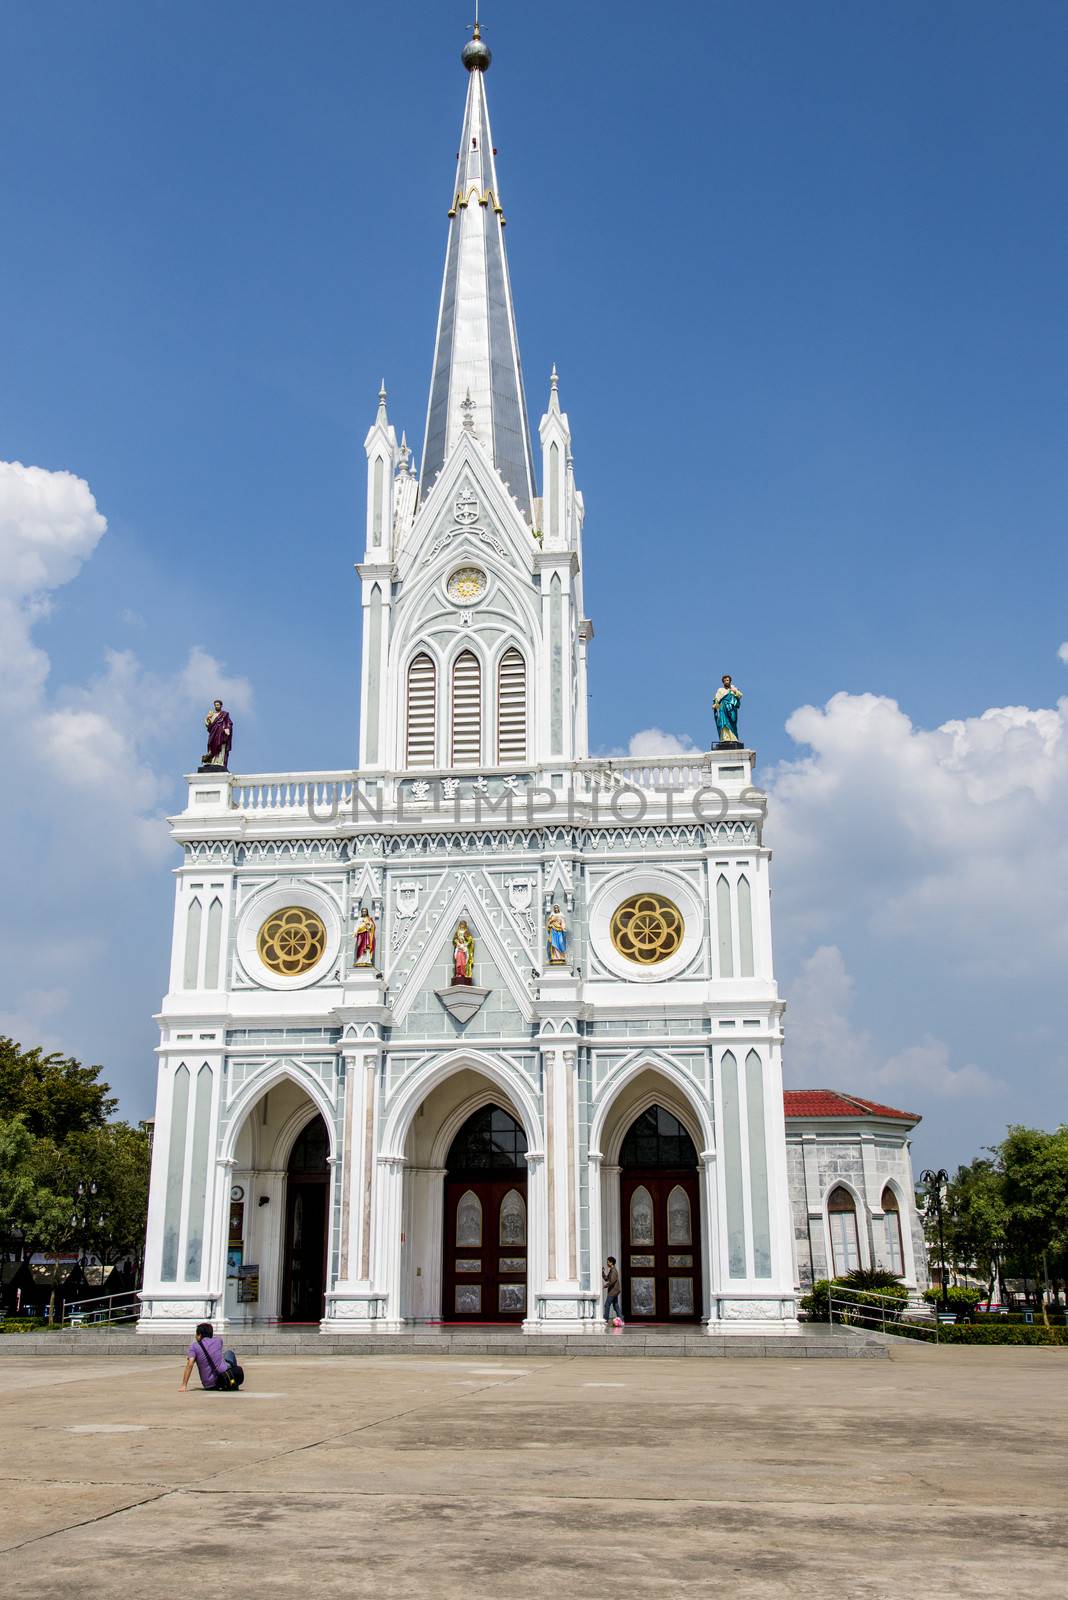 White catholic church in Samutsongkram Thailand1 by gjeerawut